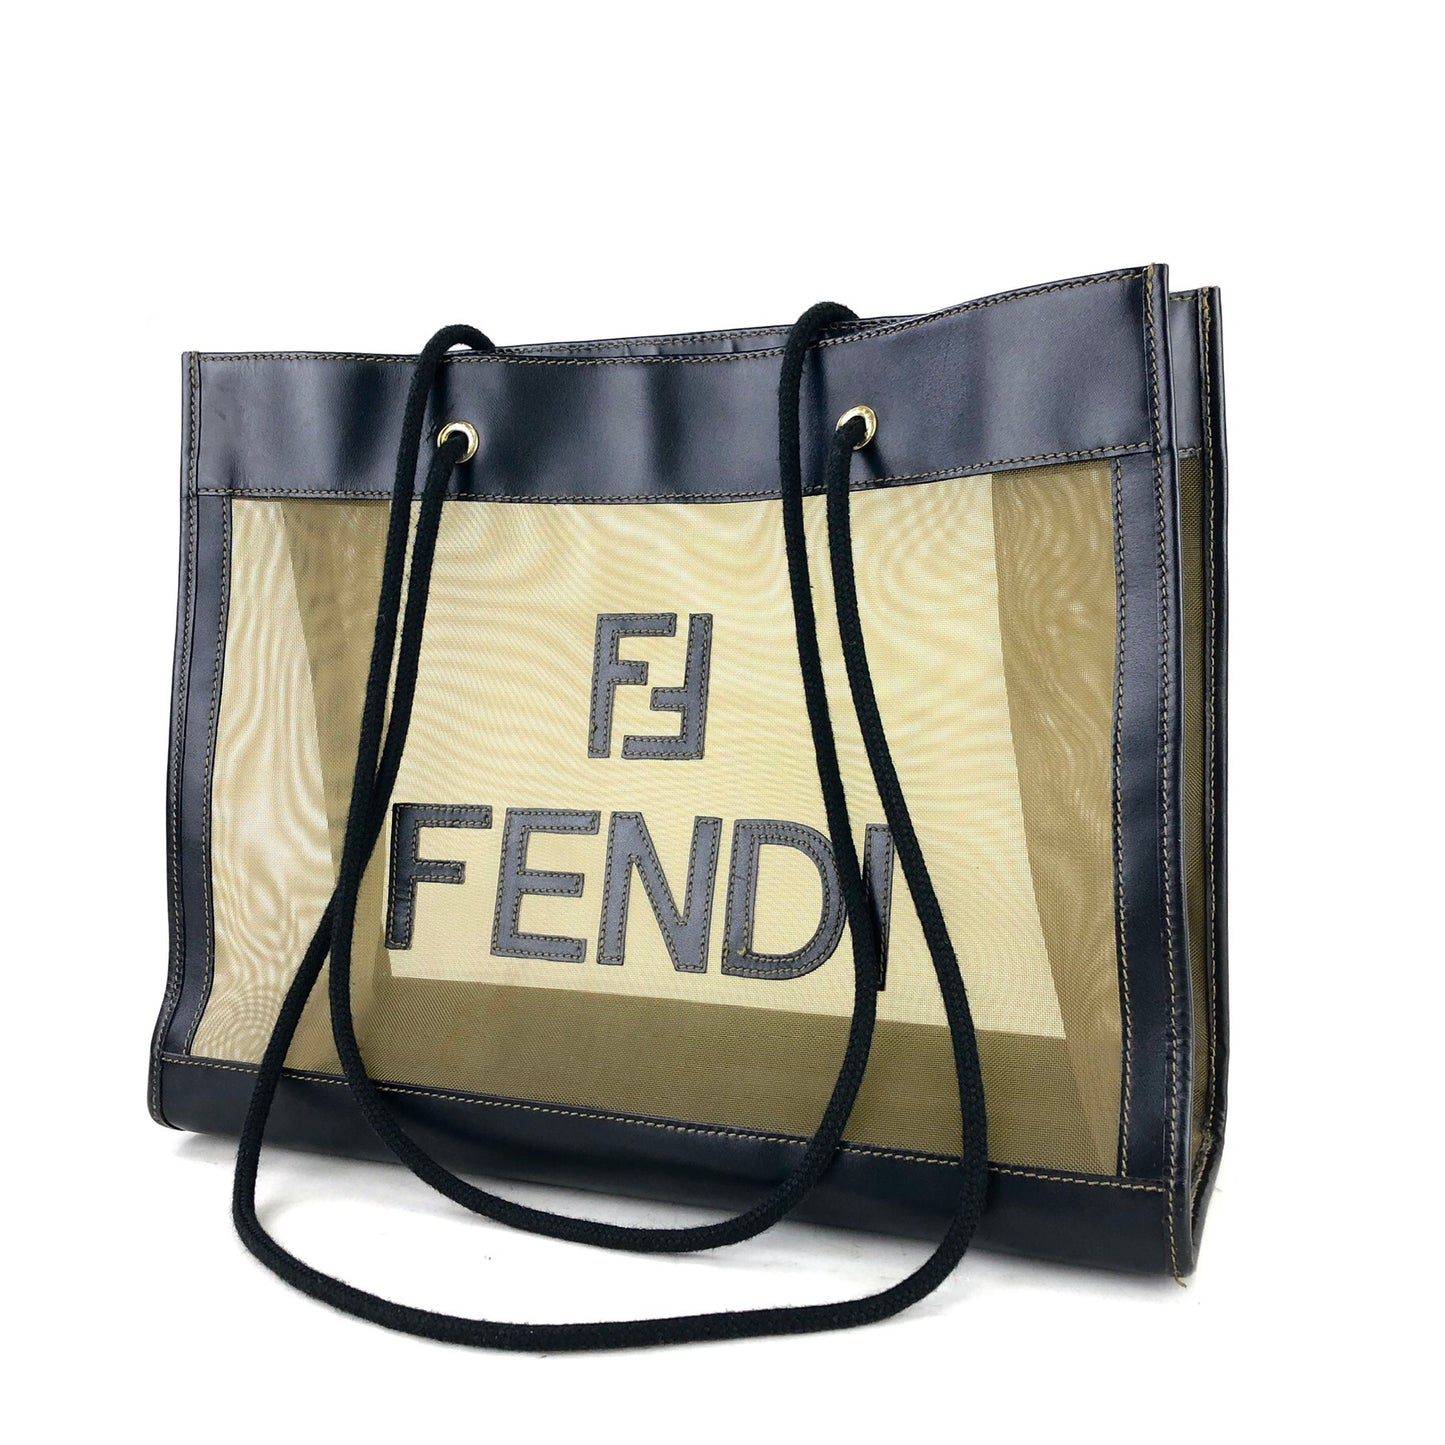 FENDI logo leather mesh square A4 tote bag black vintage old e7cfze